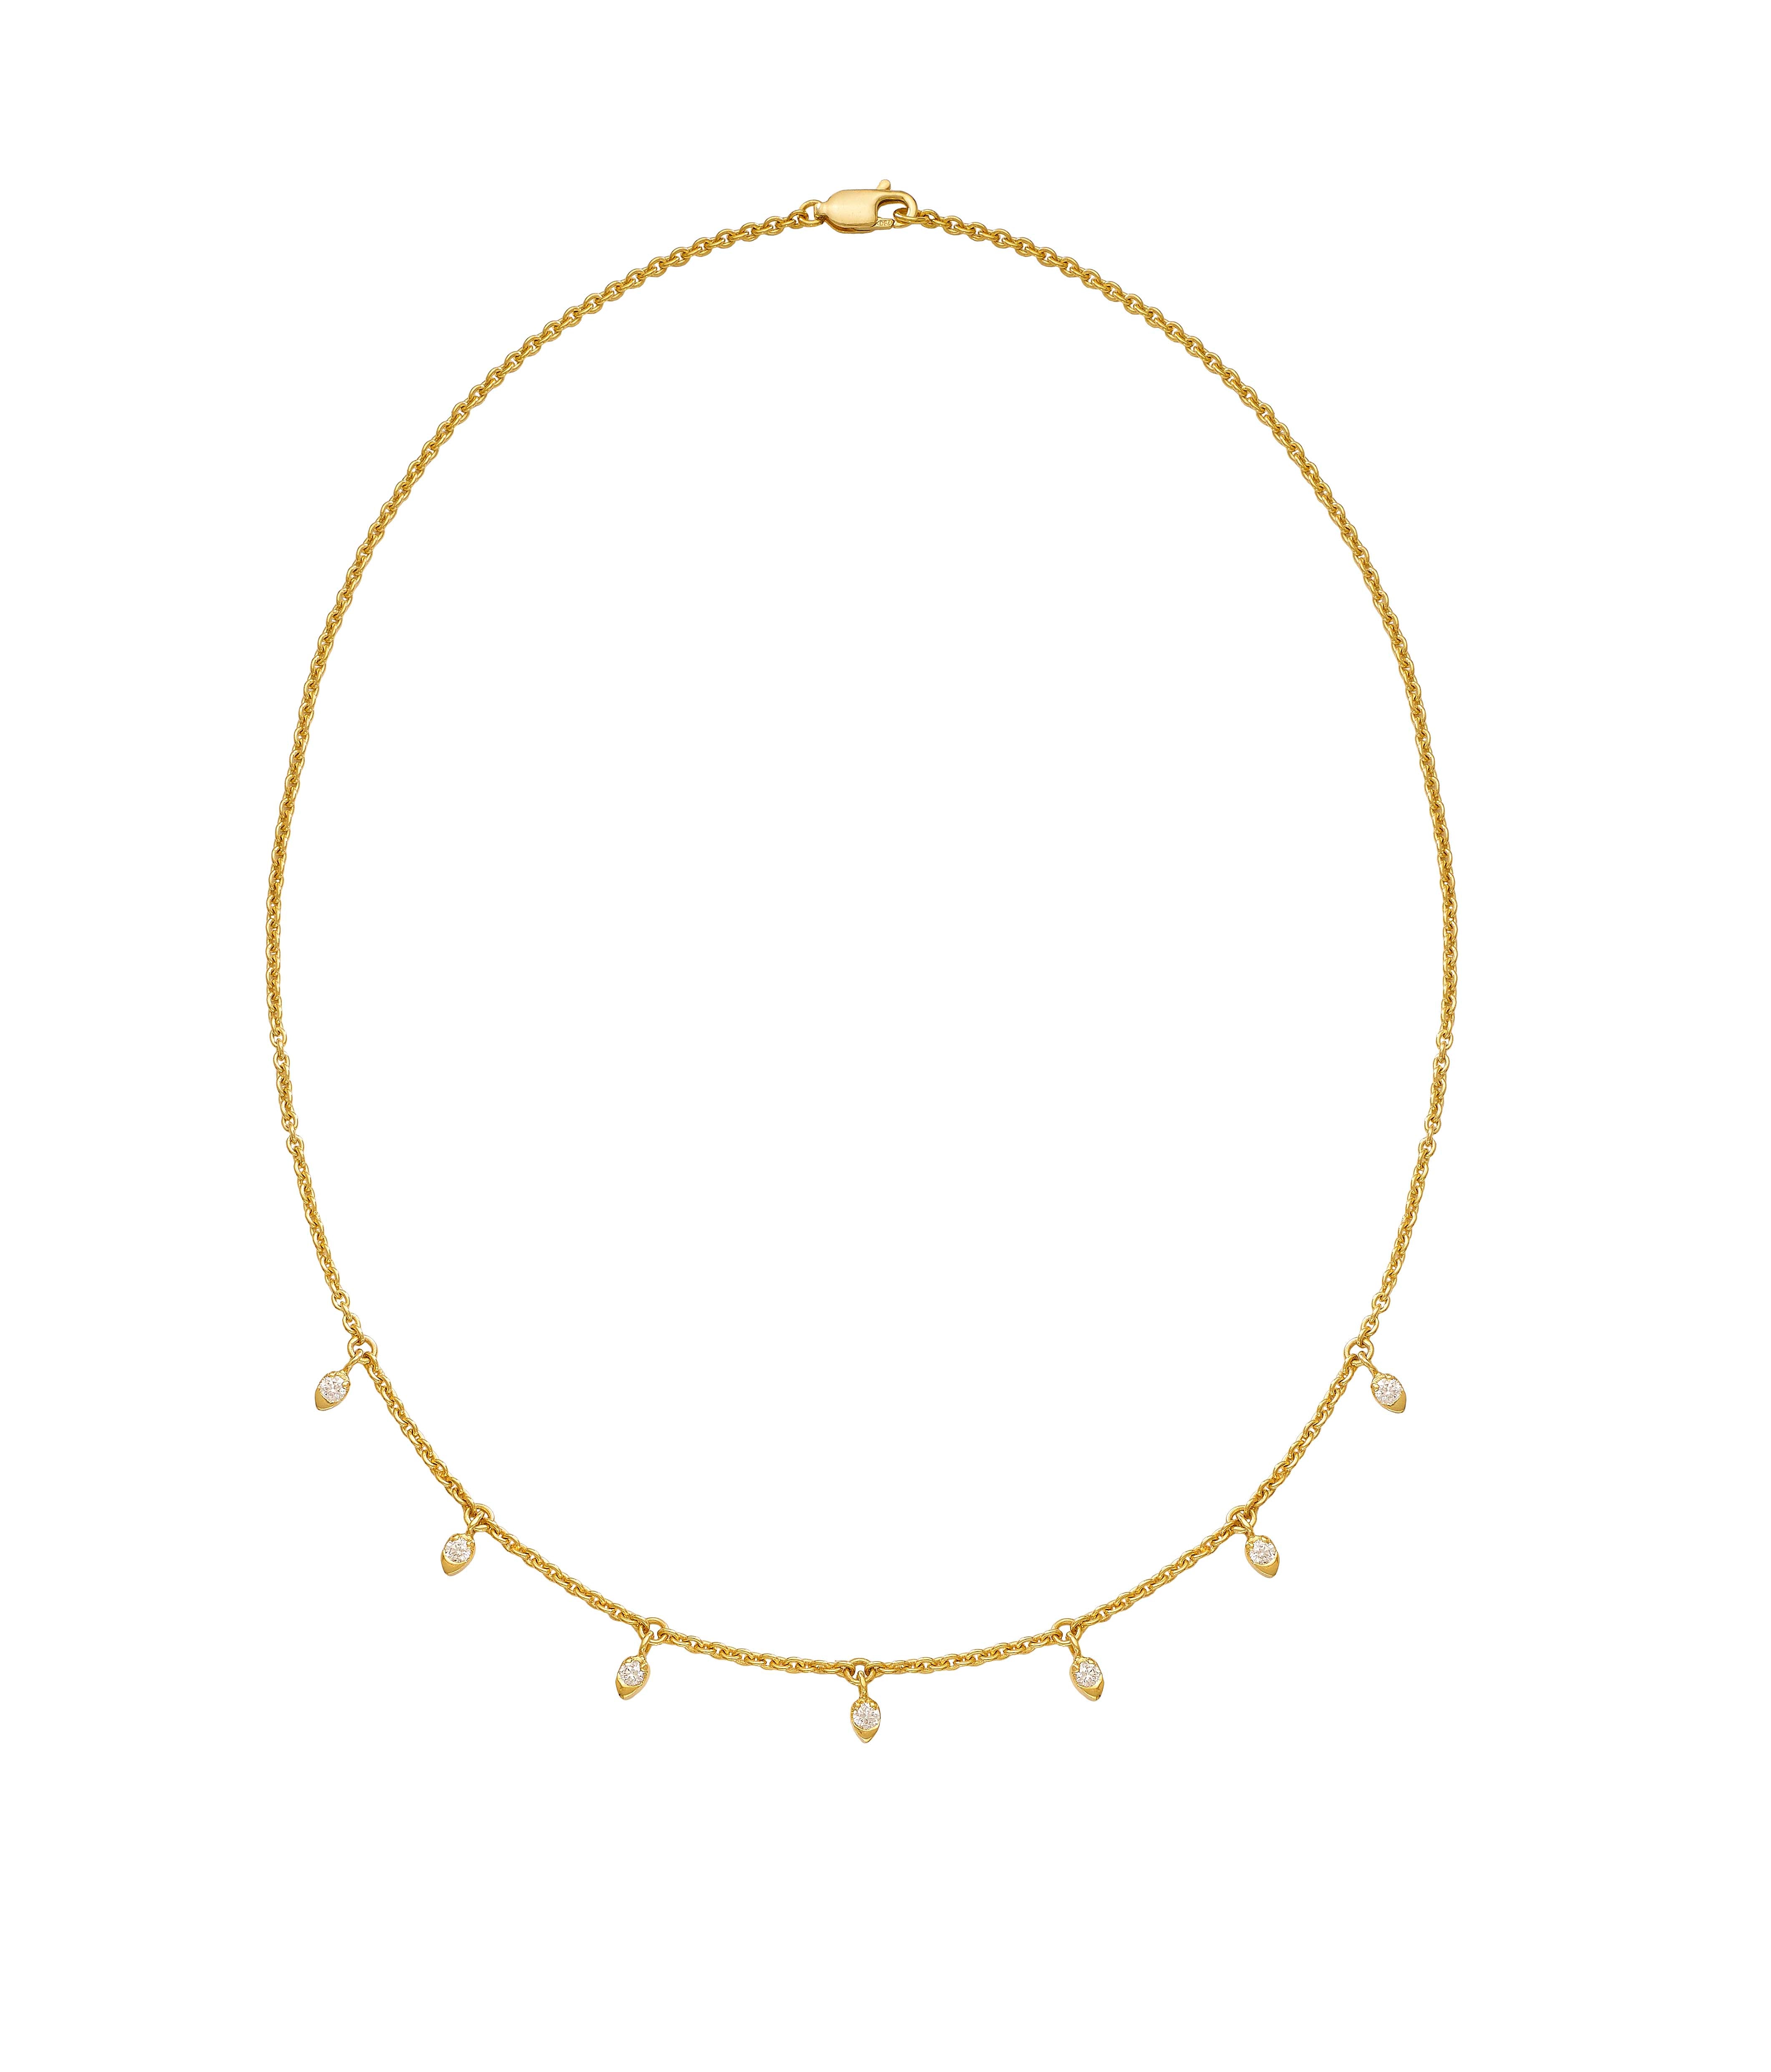 The “Simple Seven” Diamond Necklace